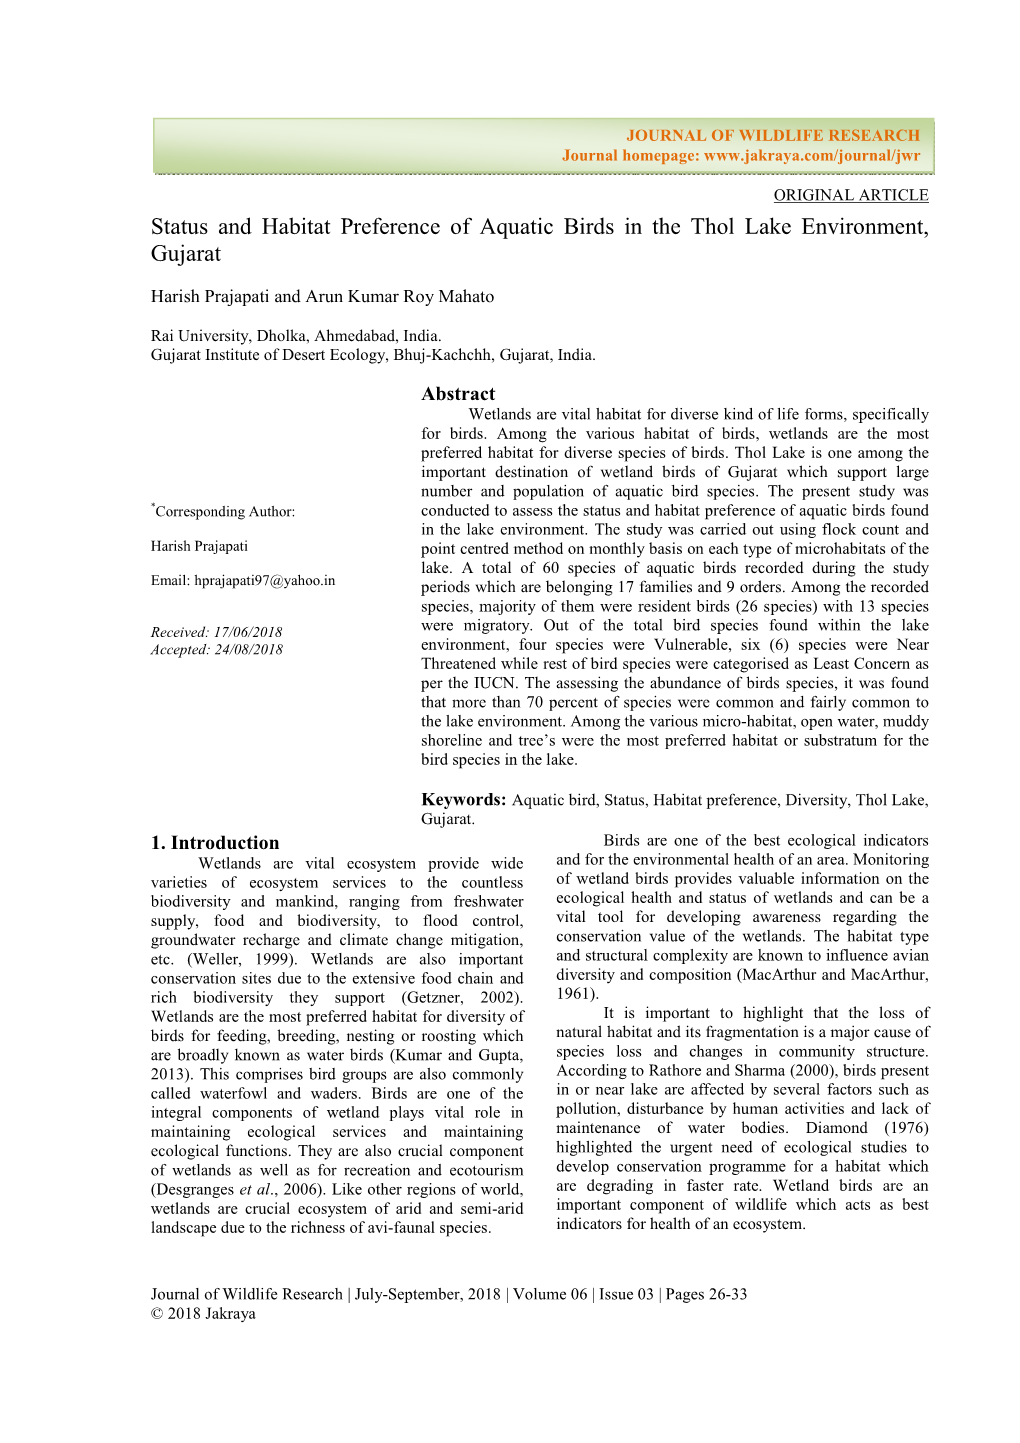 Status and Habitat Preference of Aquatic Birds in the Thol Lake Environment, Gujarat